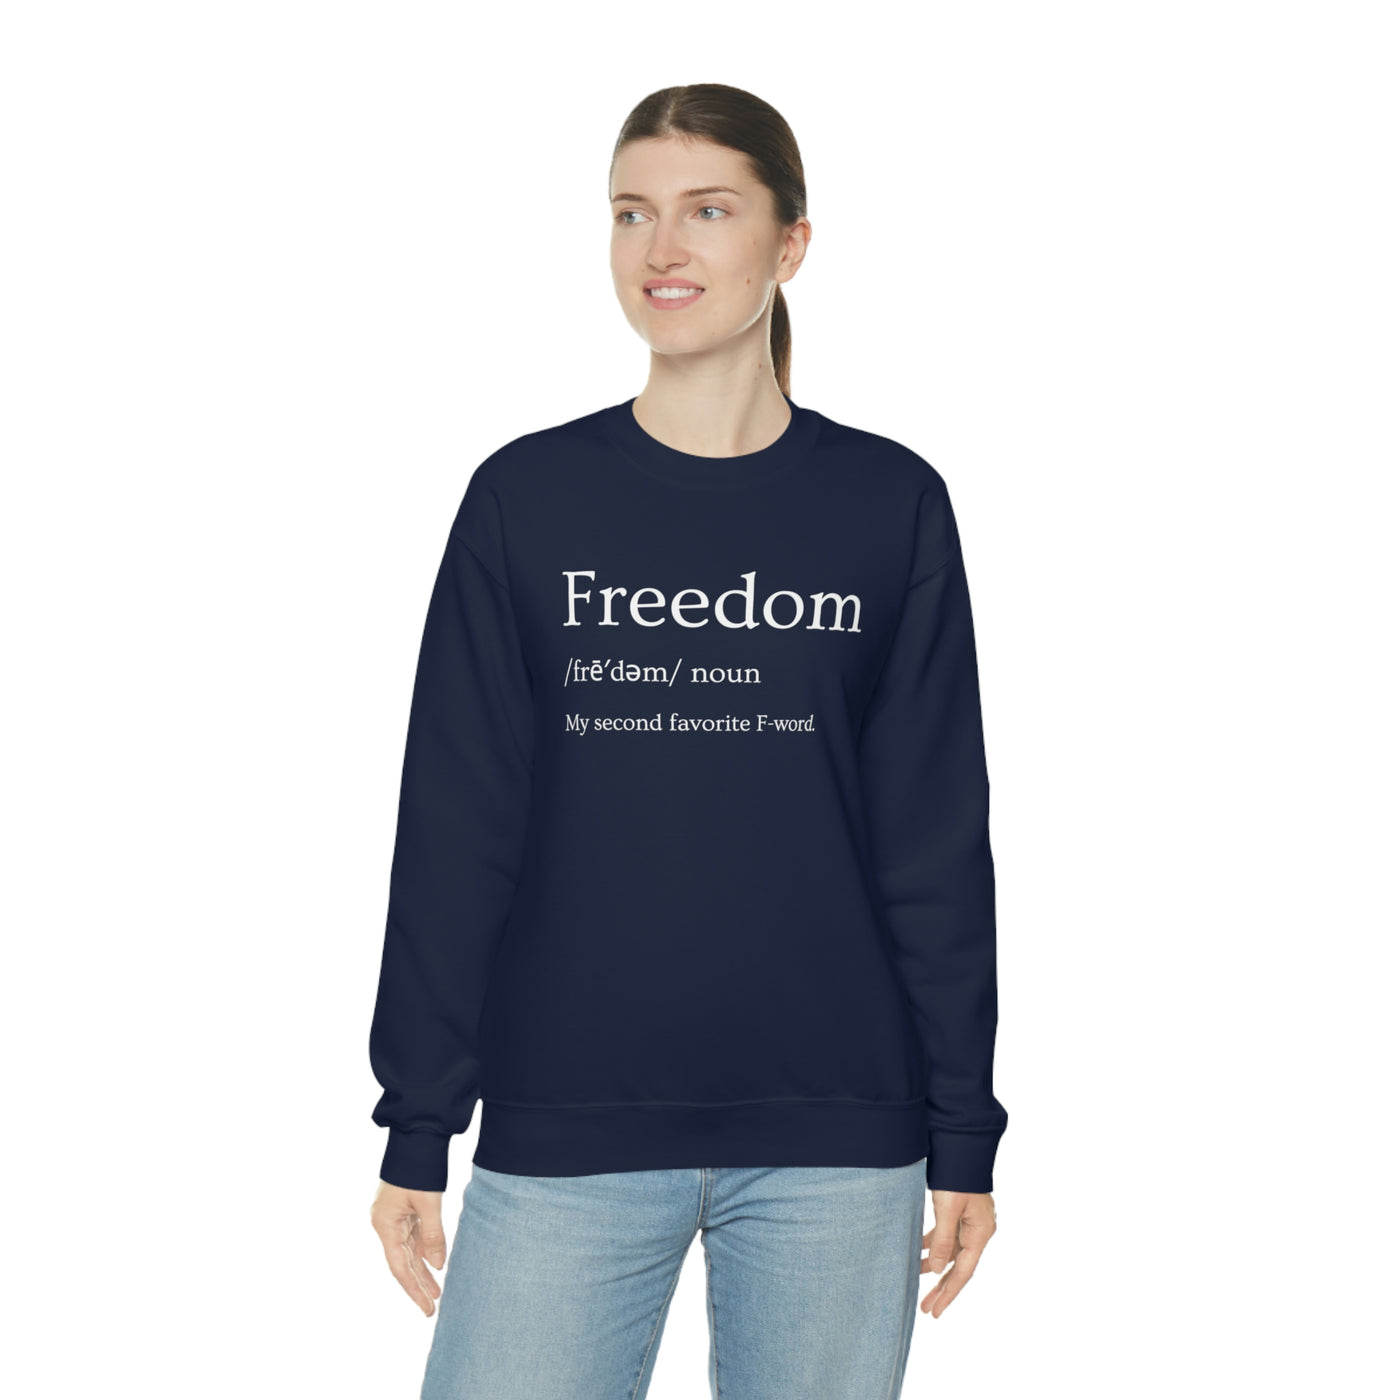 Freedom Defined Crewneck Sweatshirt